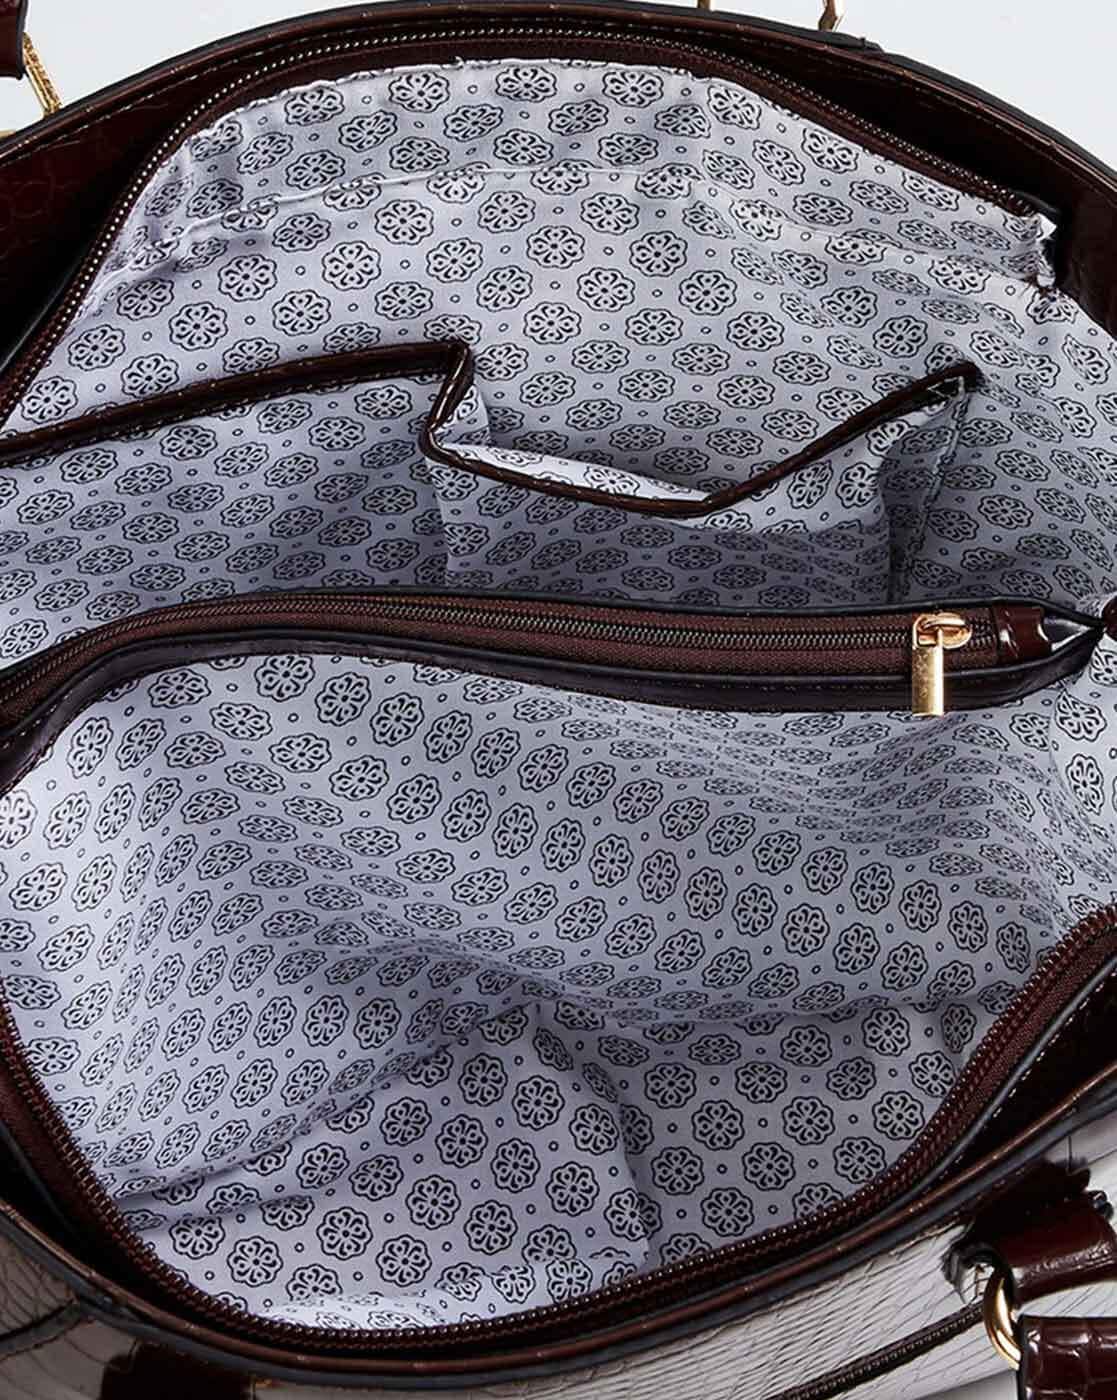 Puffed S crossbody bag | Crossbody bag, Bags, Shopping bag